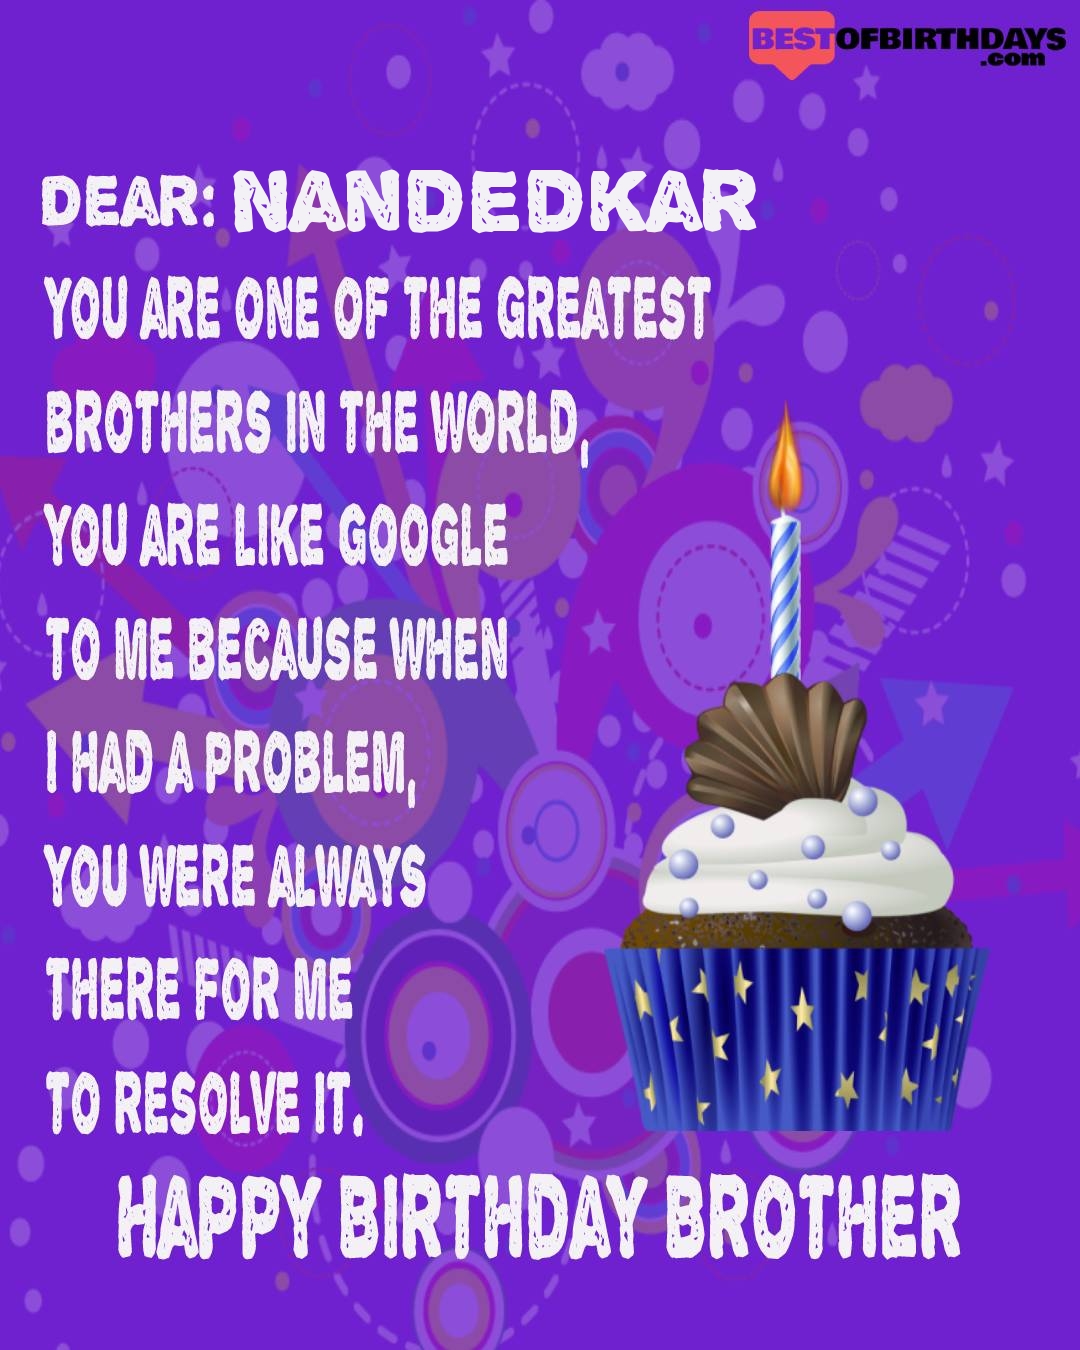 Happy birthday nandedkar bhai brother bro